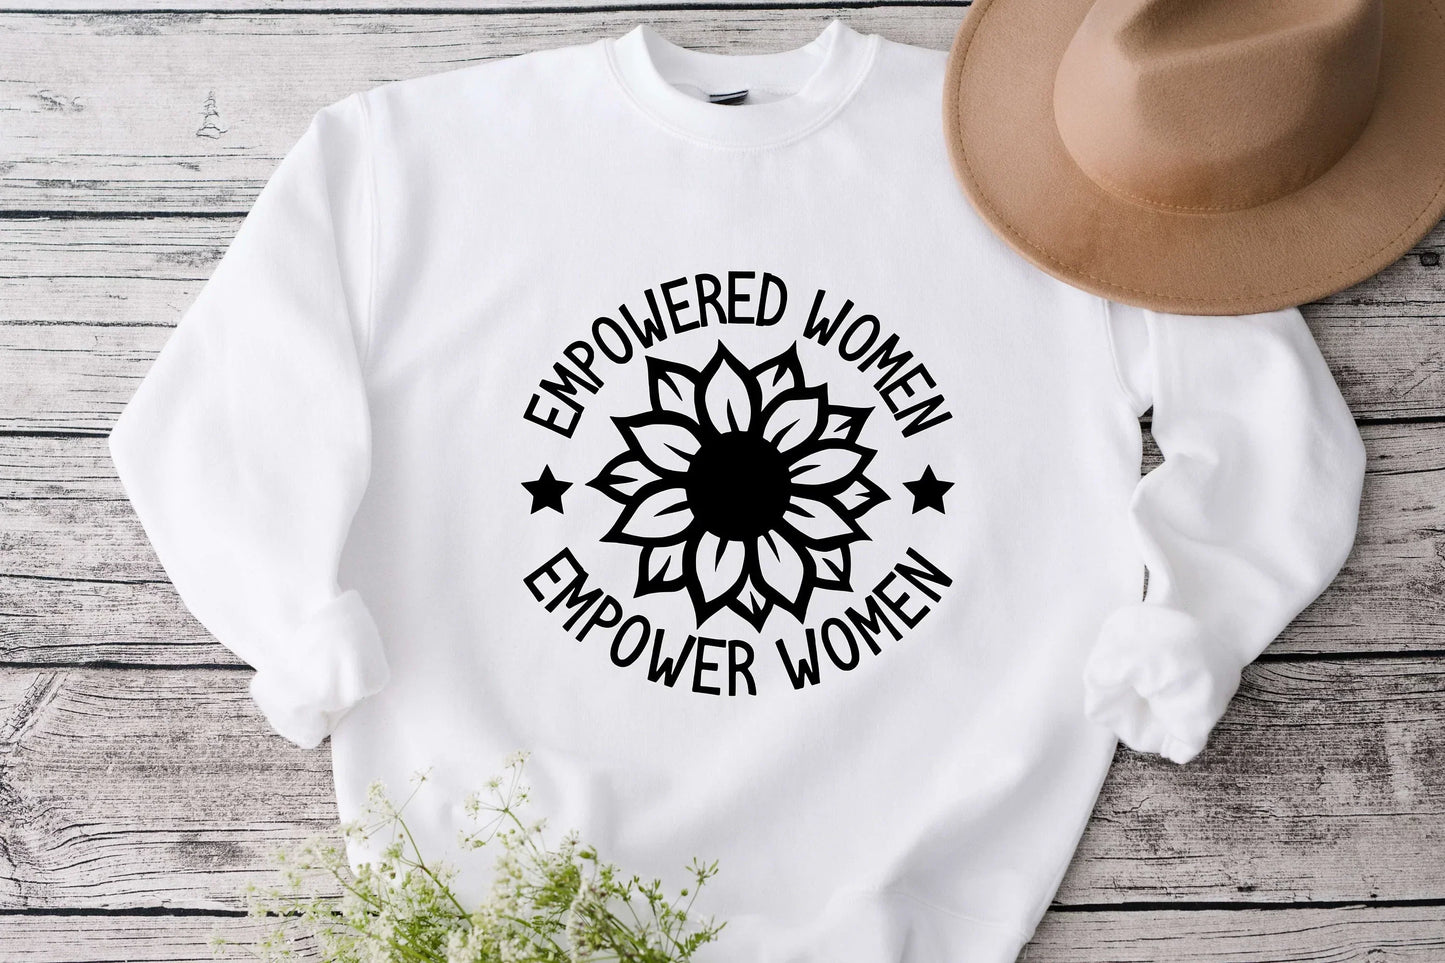 Empowered Women Empower Women T-Shirt | Prochoice Sweatshirt | Feminism | Equal Rights Hoodie | Women's Month Tshirt | Feminist Tops & Tees HMDesignStudioUS